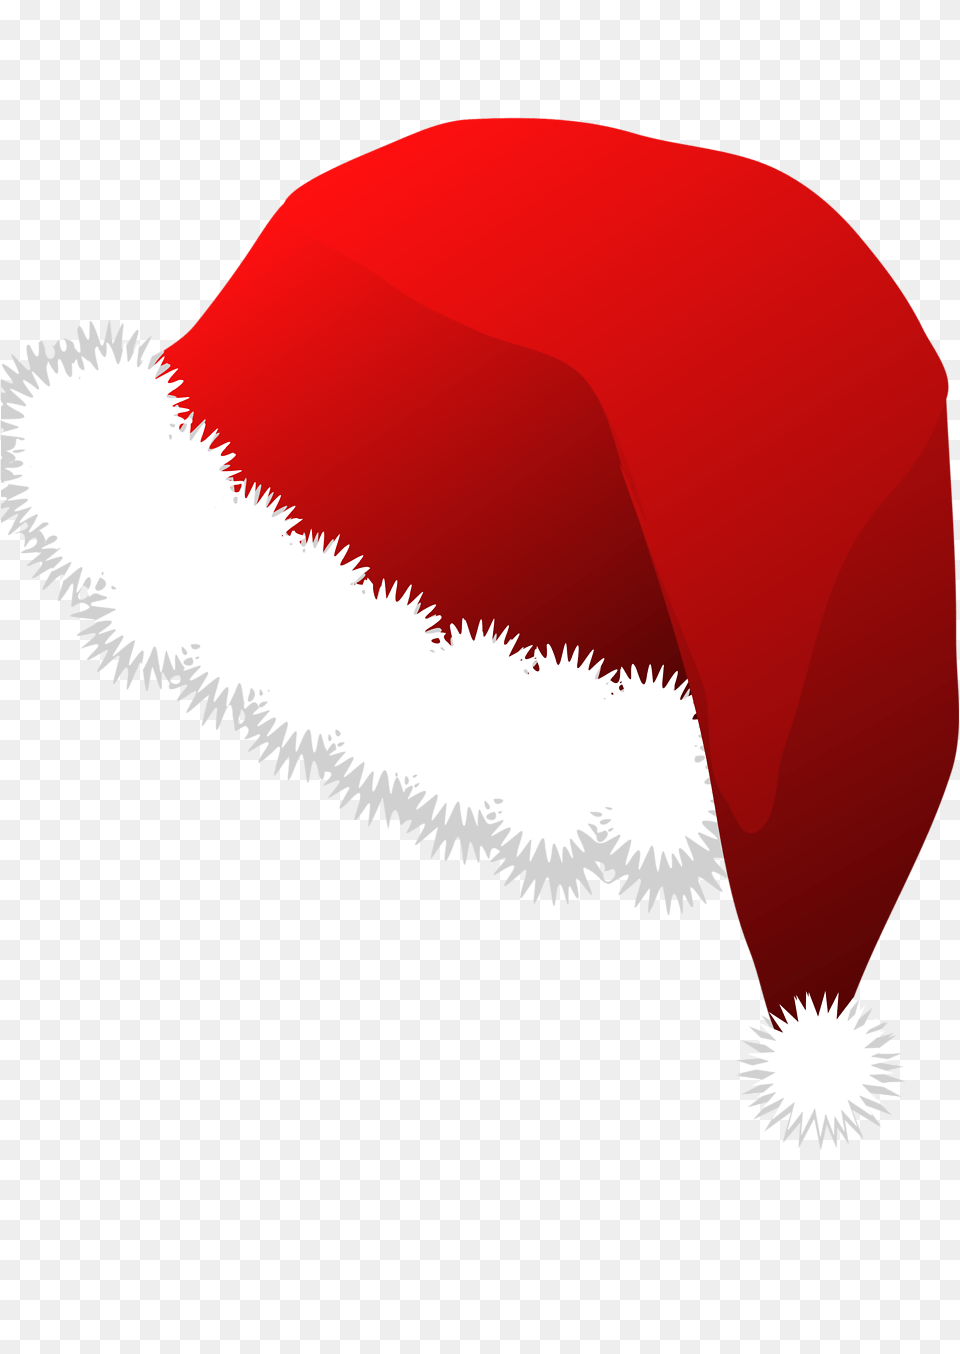 Christmas Santa Claus Red Hat Image Santa Hat Royalty Cap, Clothing Free Transparent Png